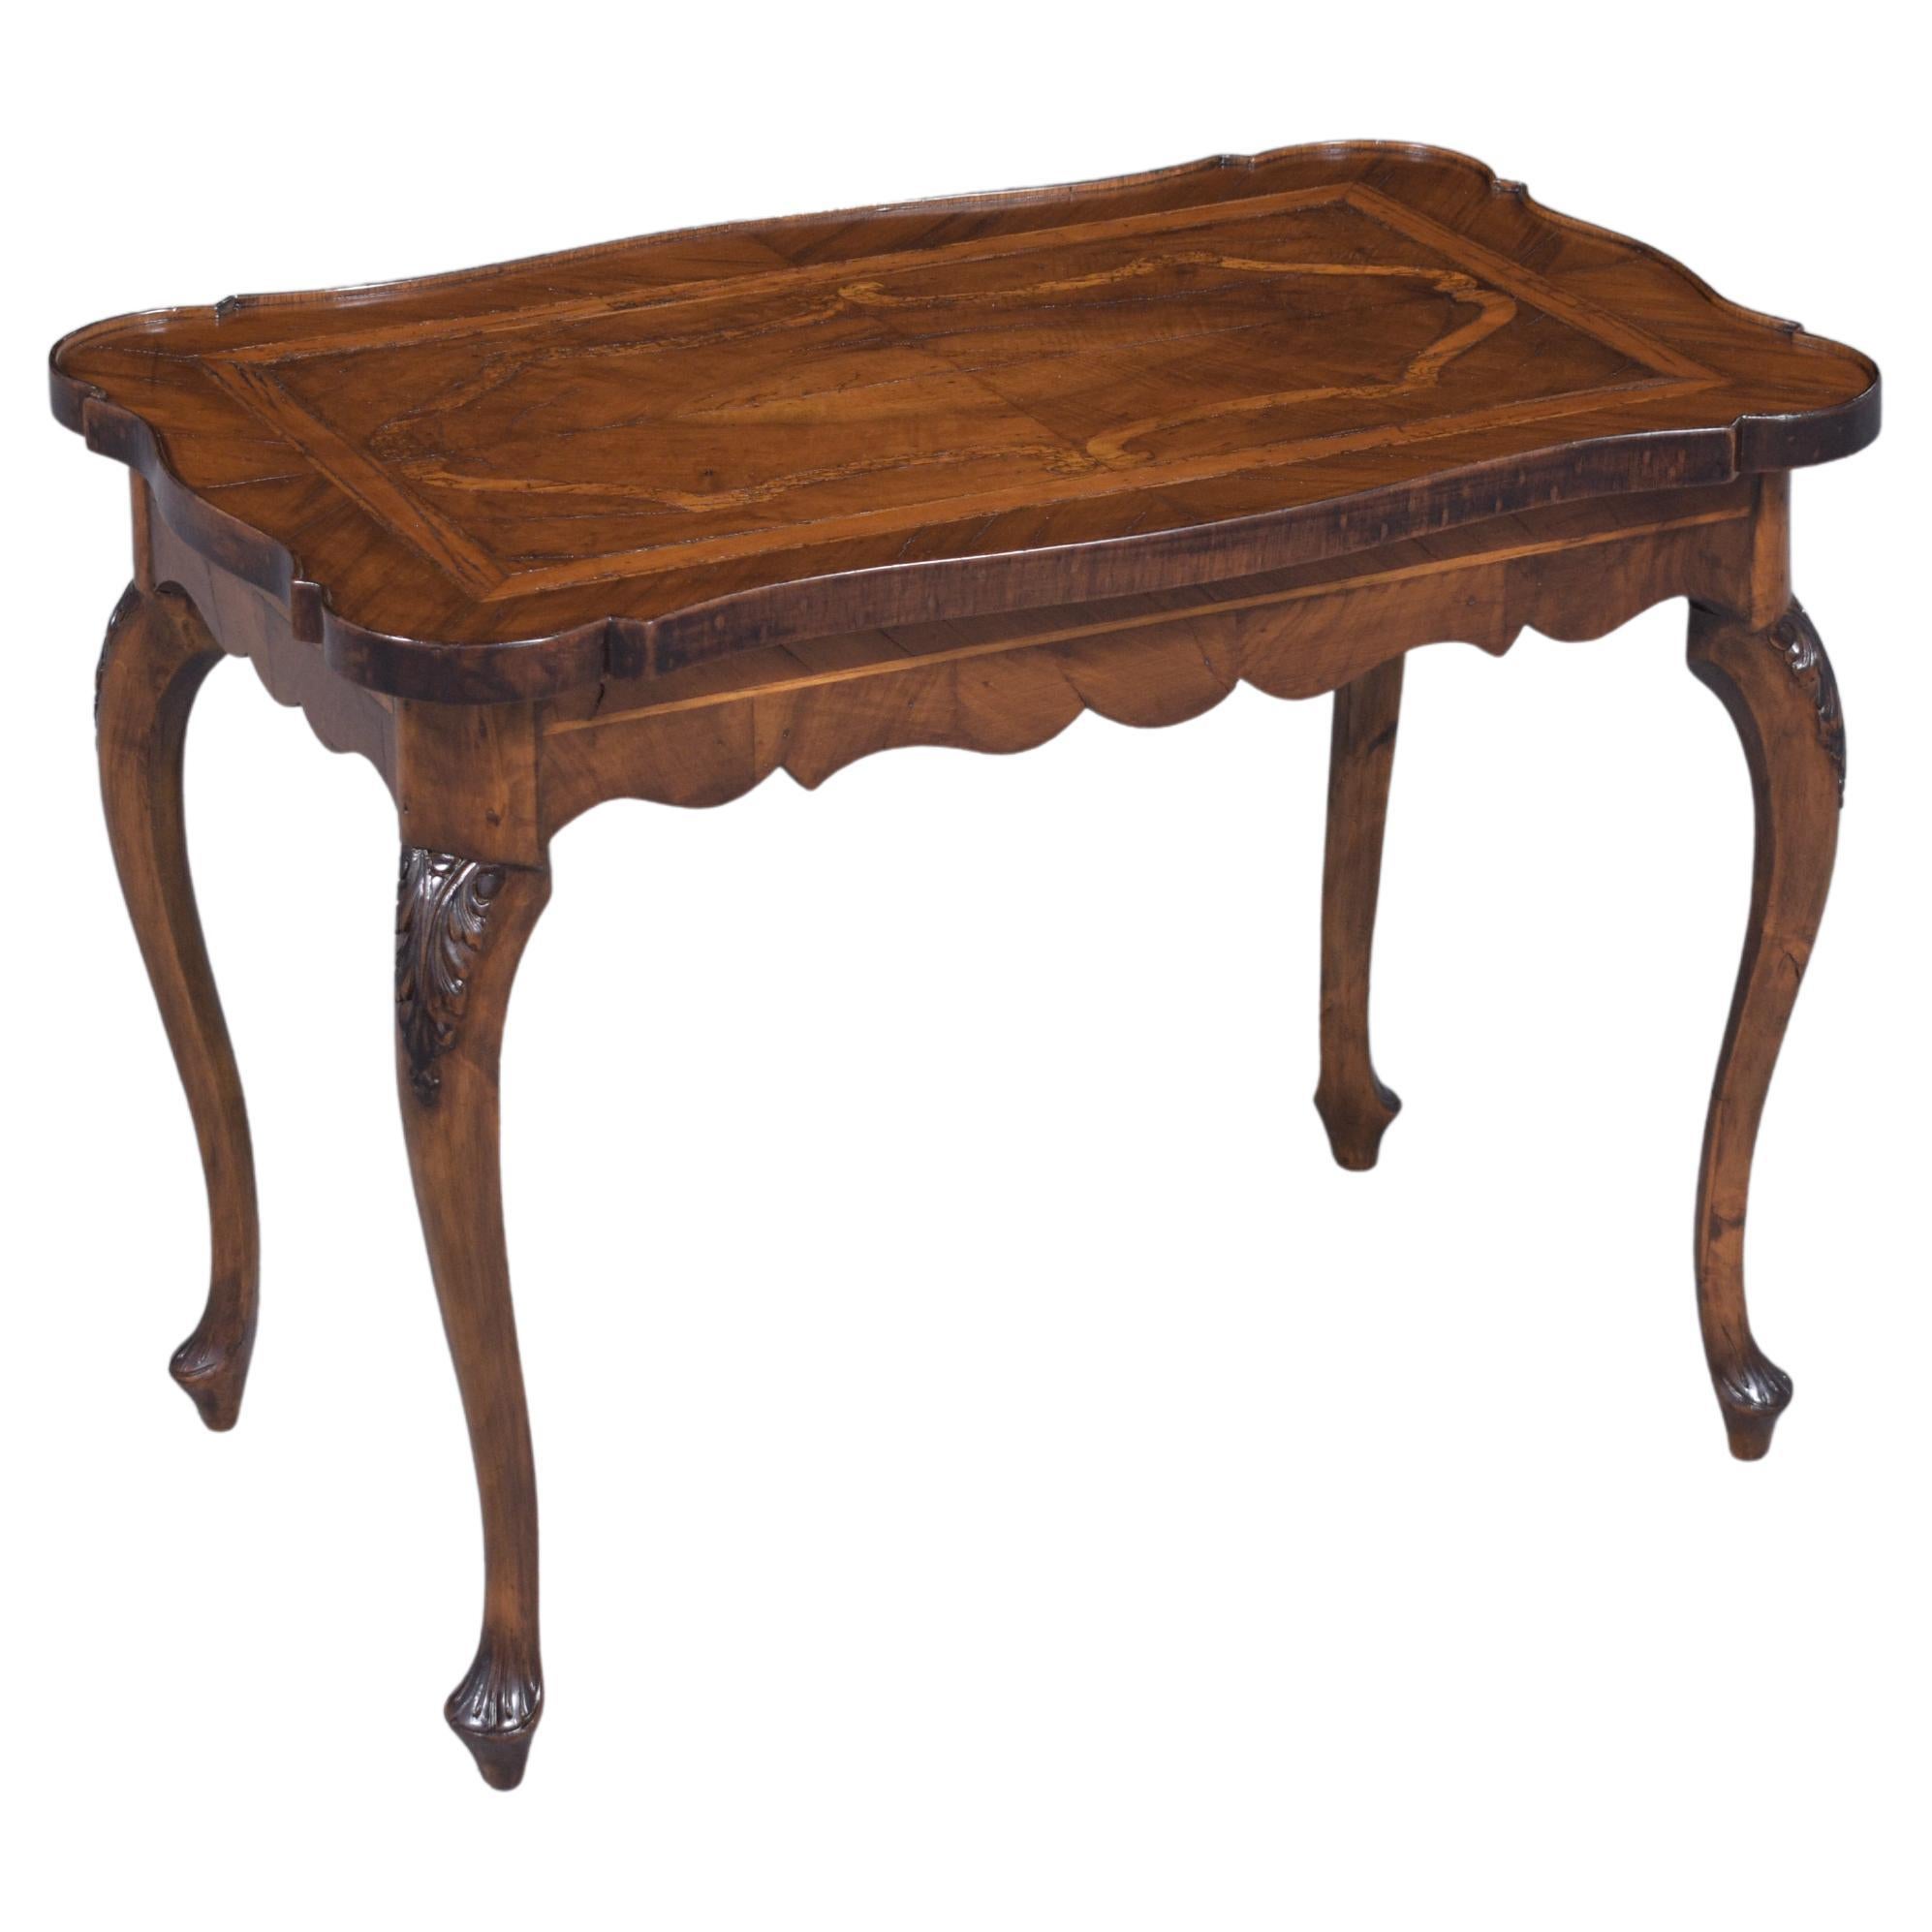 Late 19th-Century English Walnut Side Table: Antique Elegance Restored